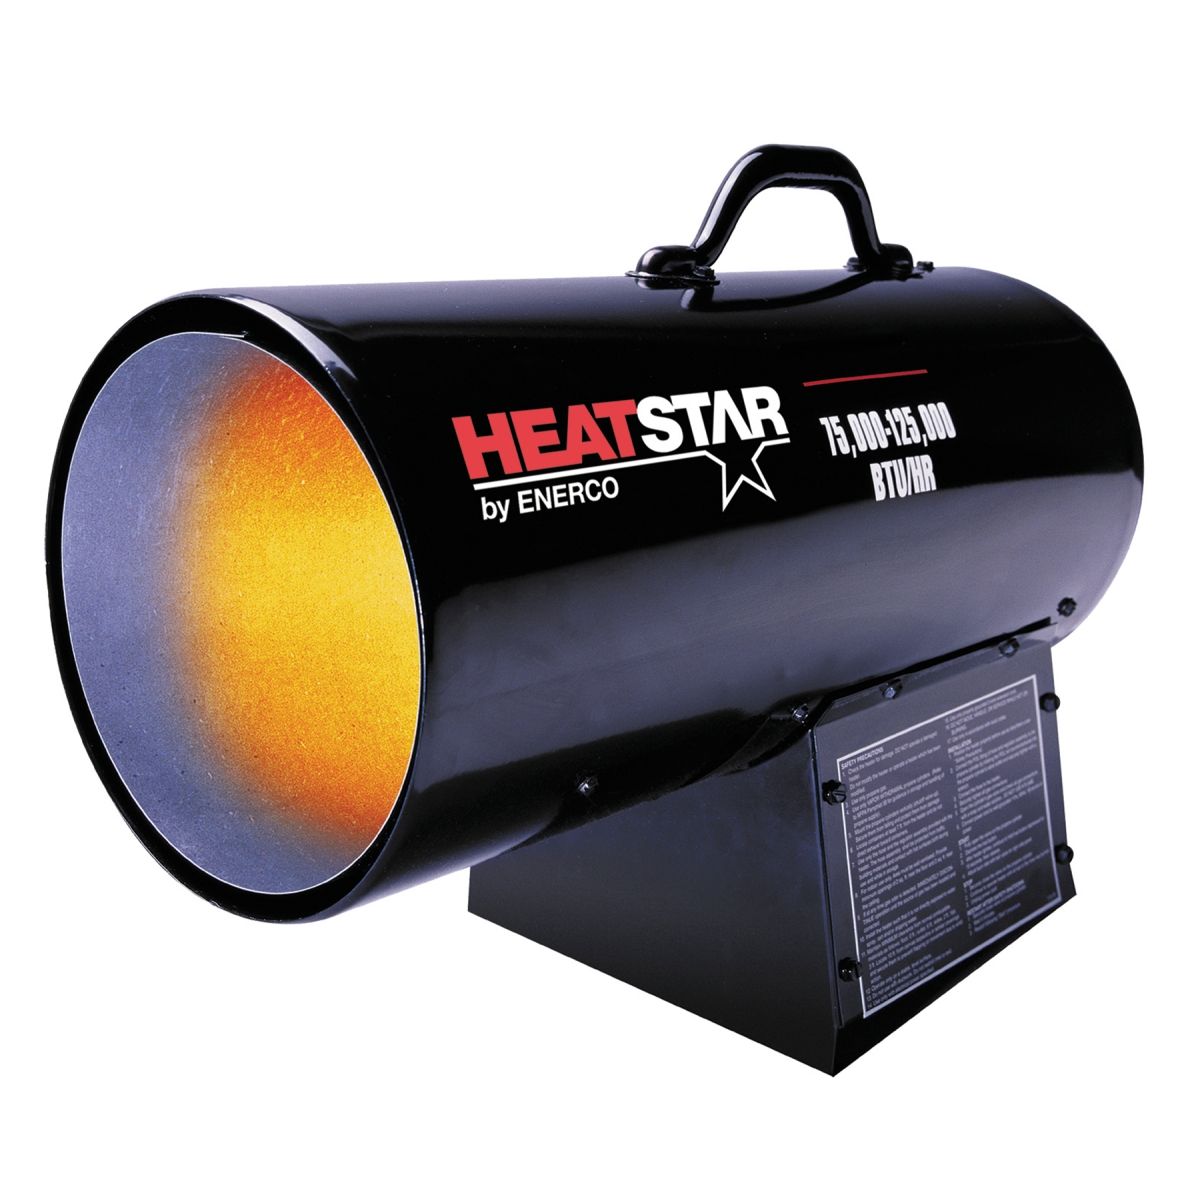 Portable Propane Heater, 75125,000 BTU HR F170125